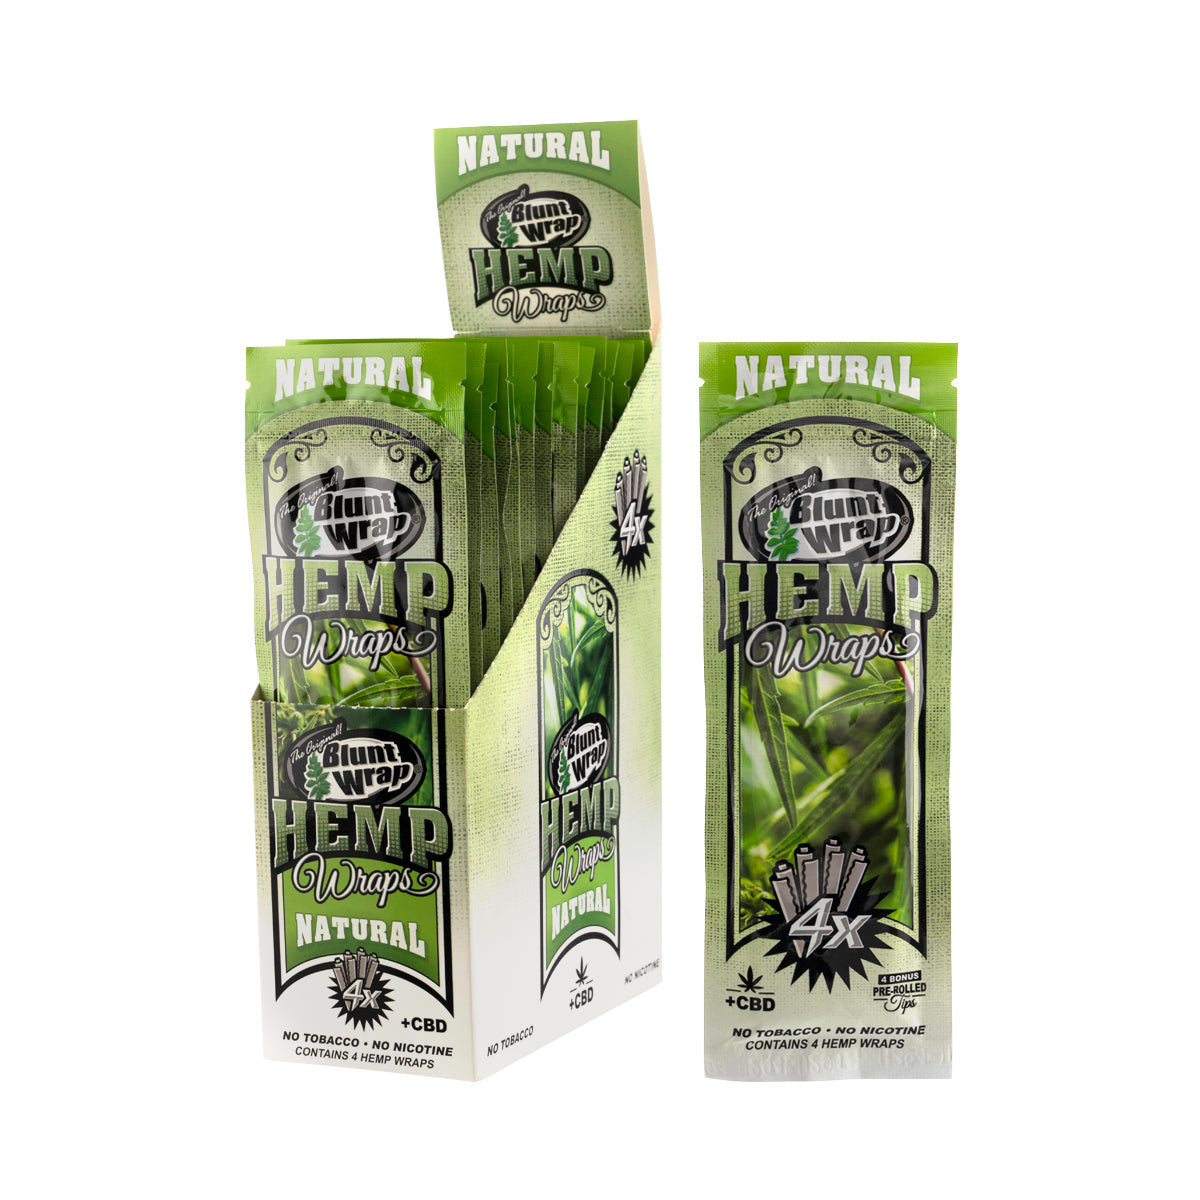 Original Blunt Wrap | 'Retail Display' Hemp Wrap | 105mm - Various Flavors - 15 Count Hemp Wraps Original Blunt Wrap Natural  